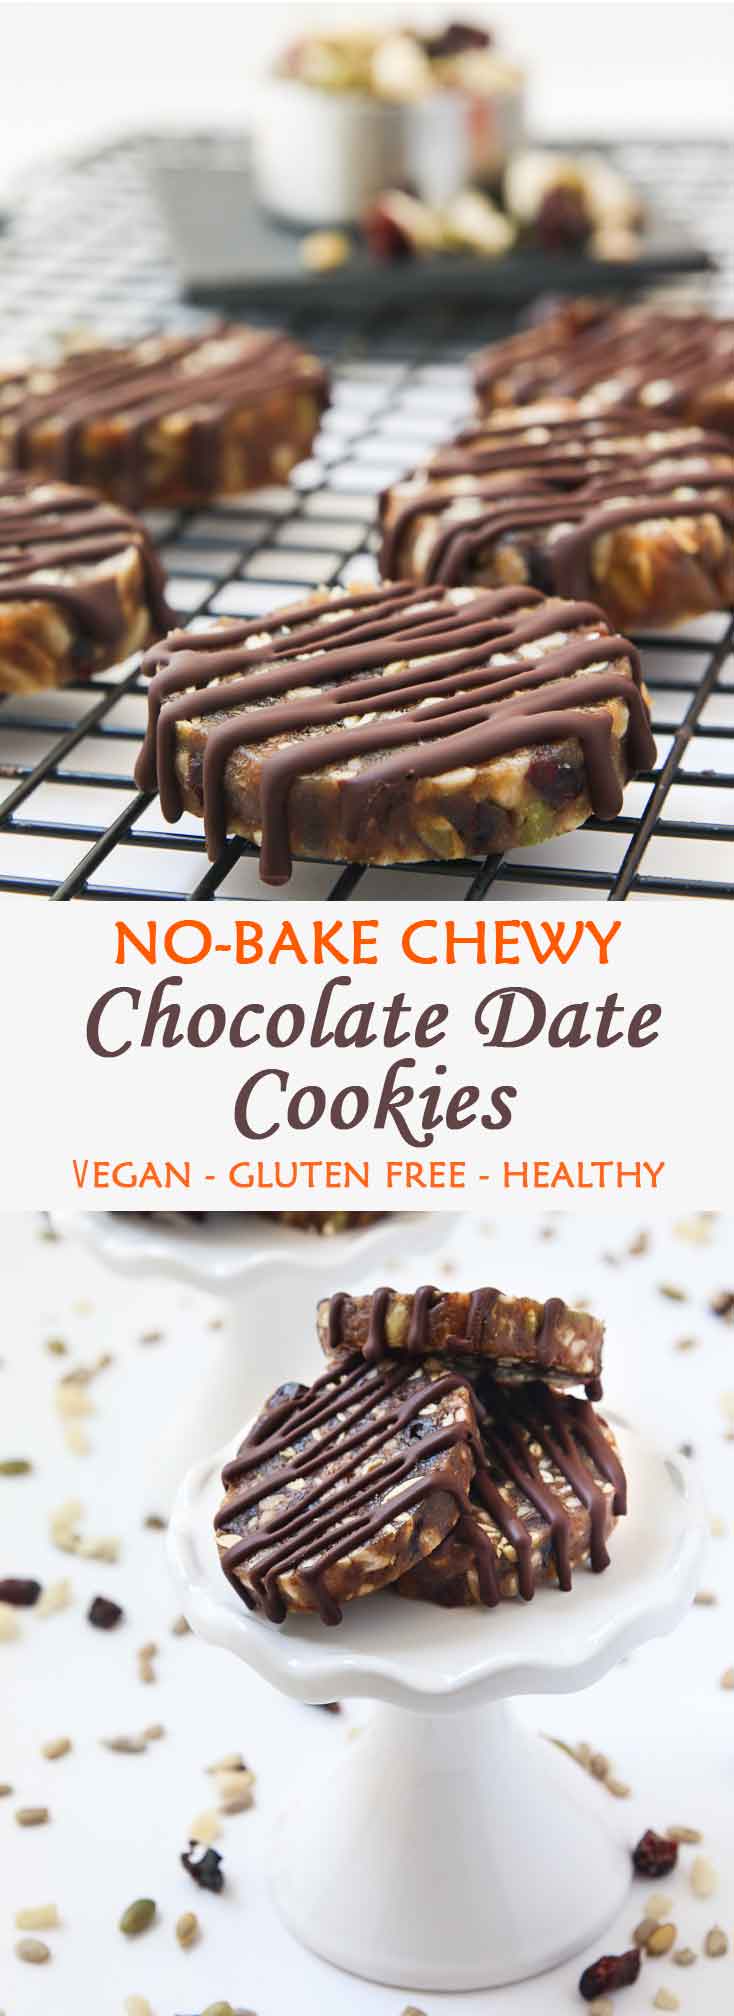 No-Bake Chewy Chocolate Date Cookies #allergenfriendly #vegan #glutenfree #nobake | VegetarianGastronomy.com | www.VegetarianGastronomy.com